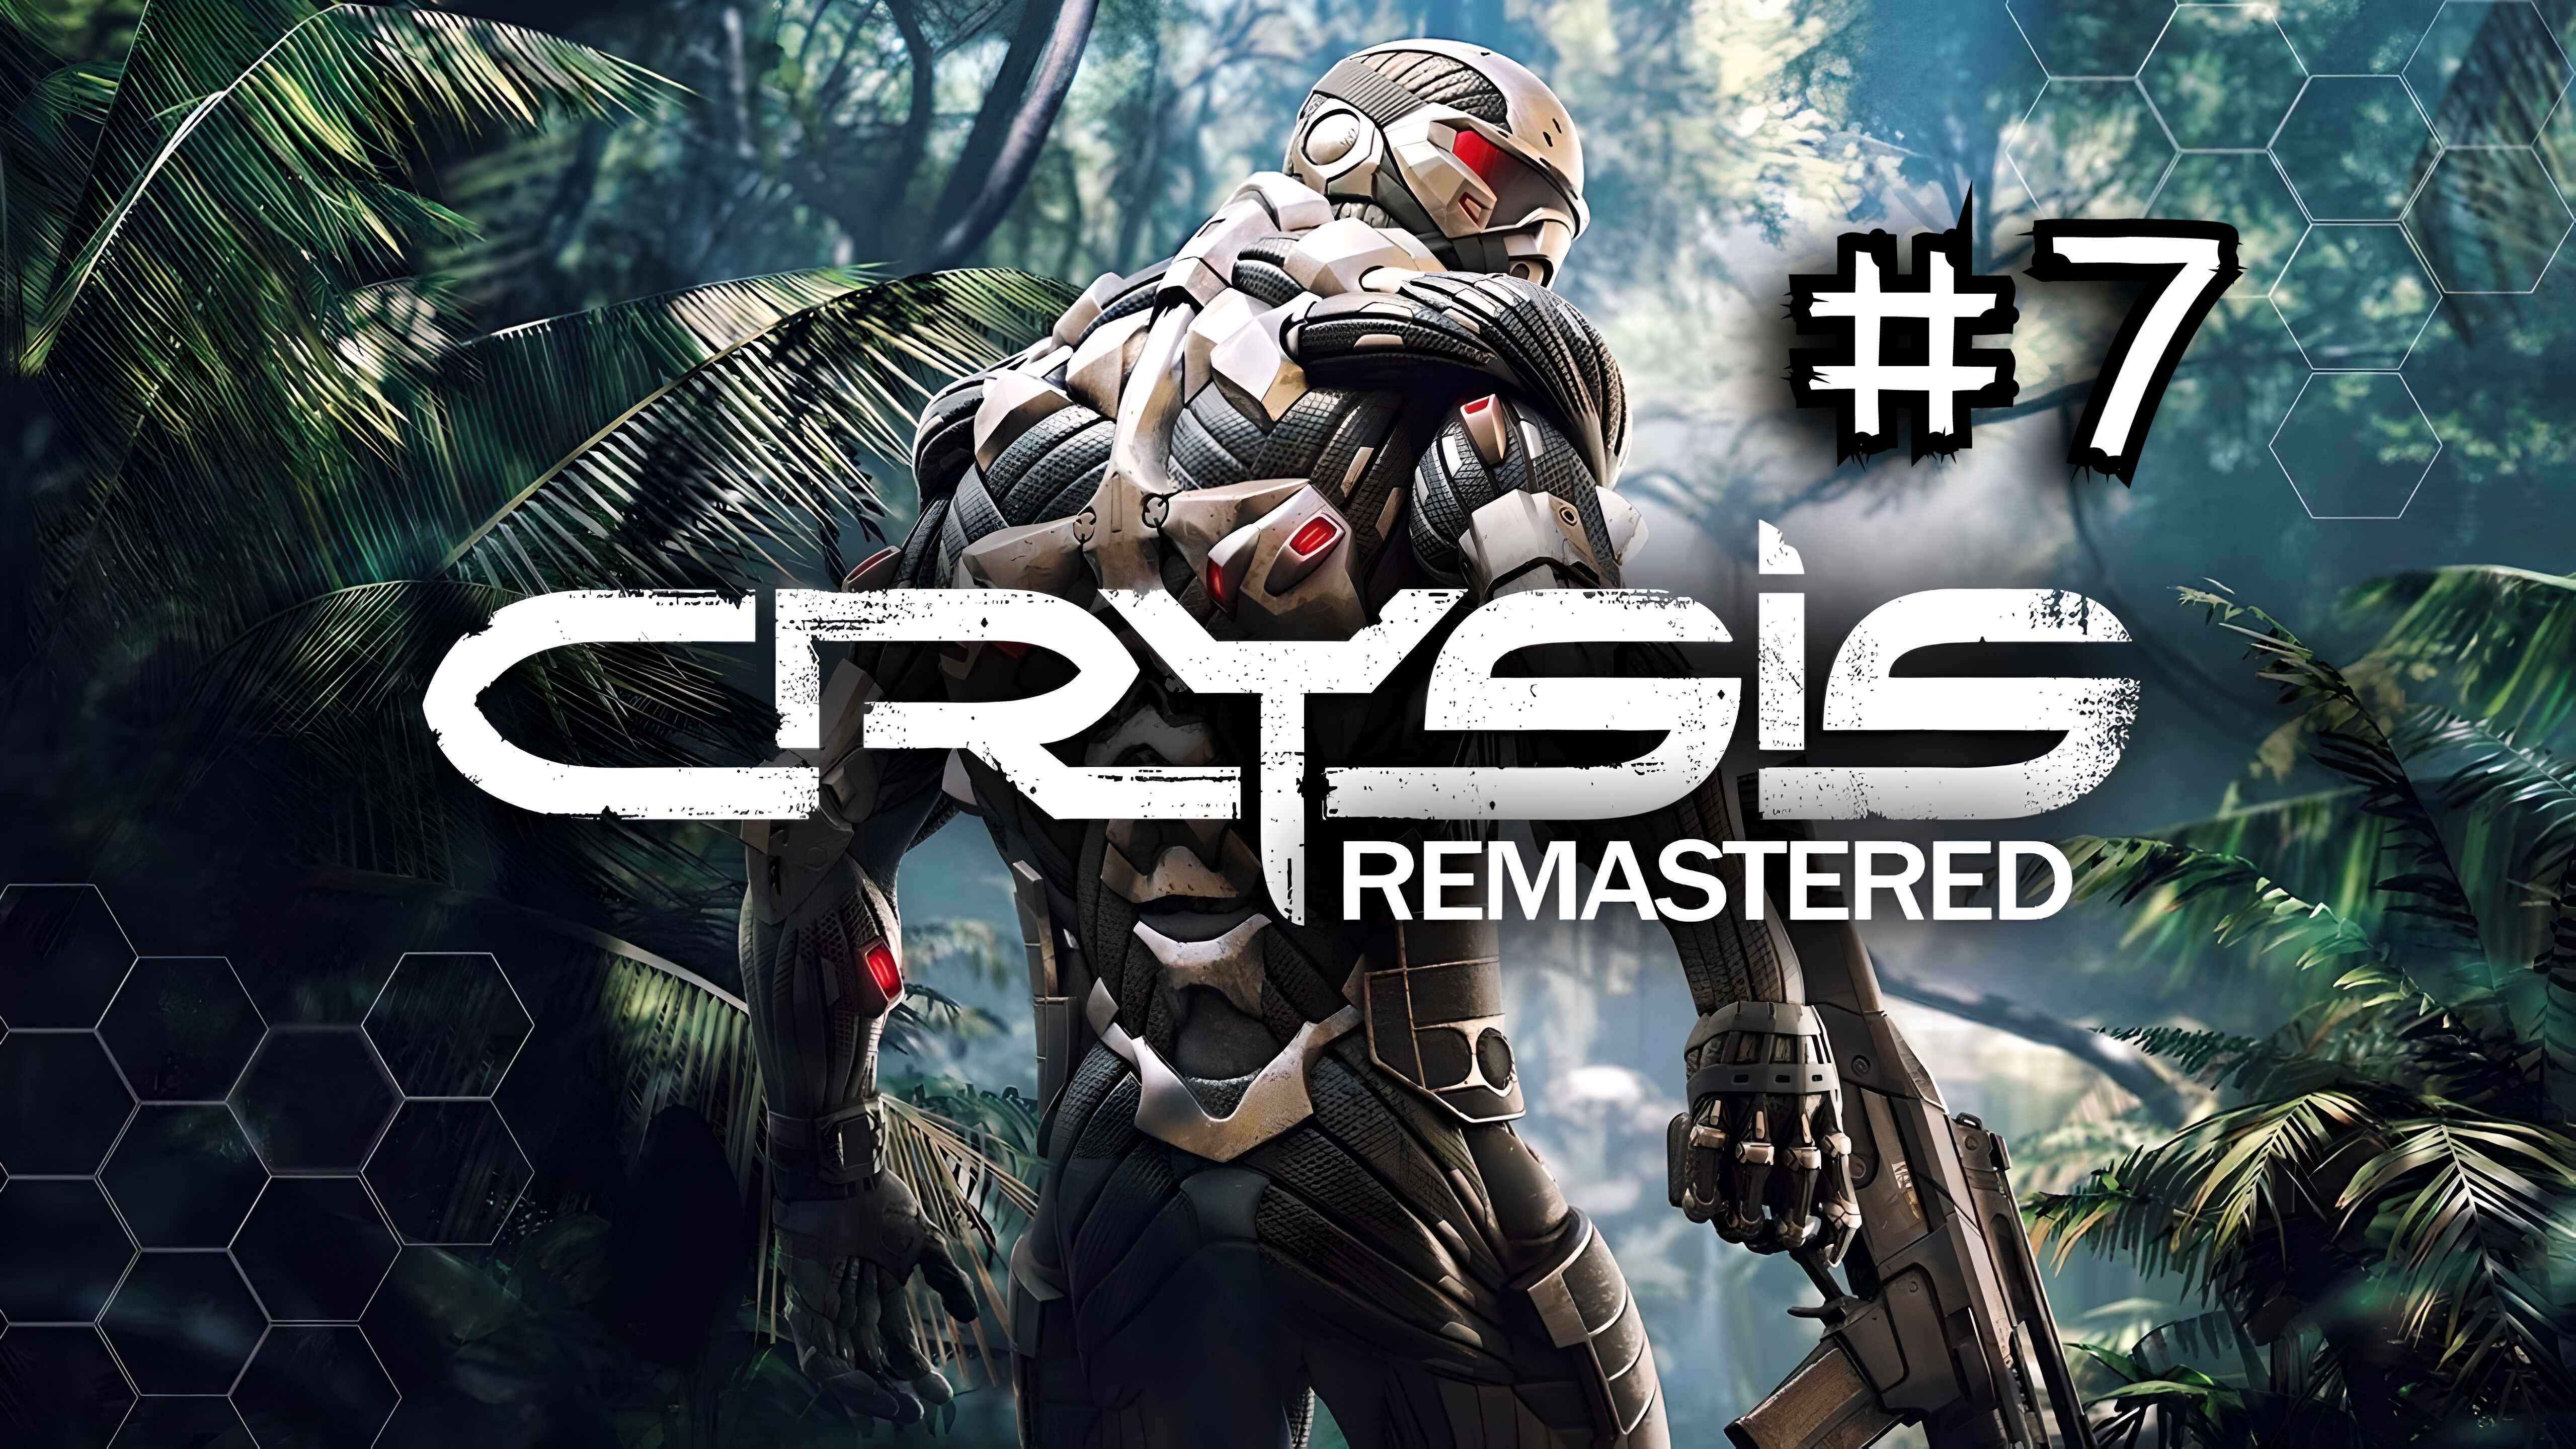 Crysis ключи. Крайсис 3. Crysis Remastered. Крайсис 1. Crysis 3 ps3 обложка.